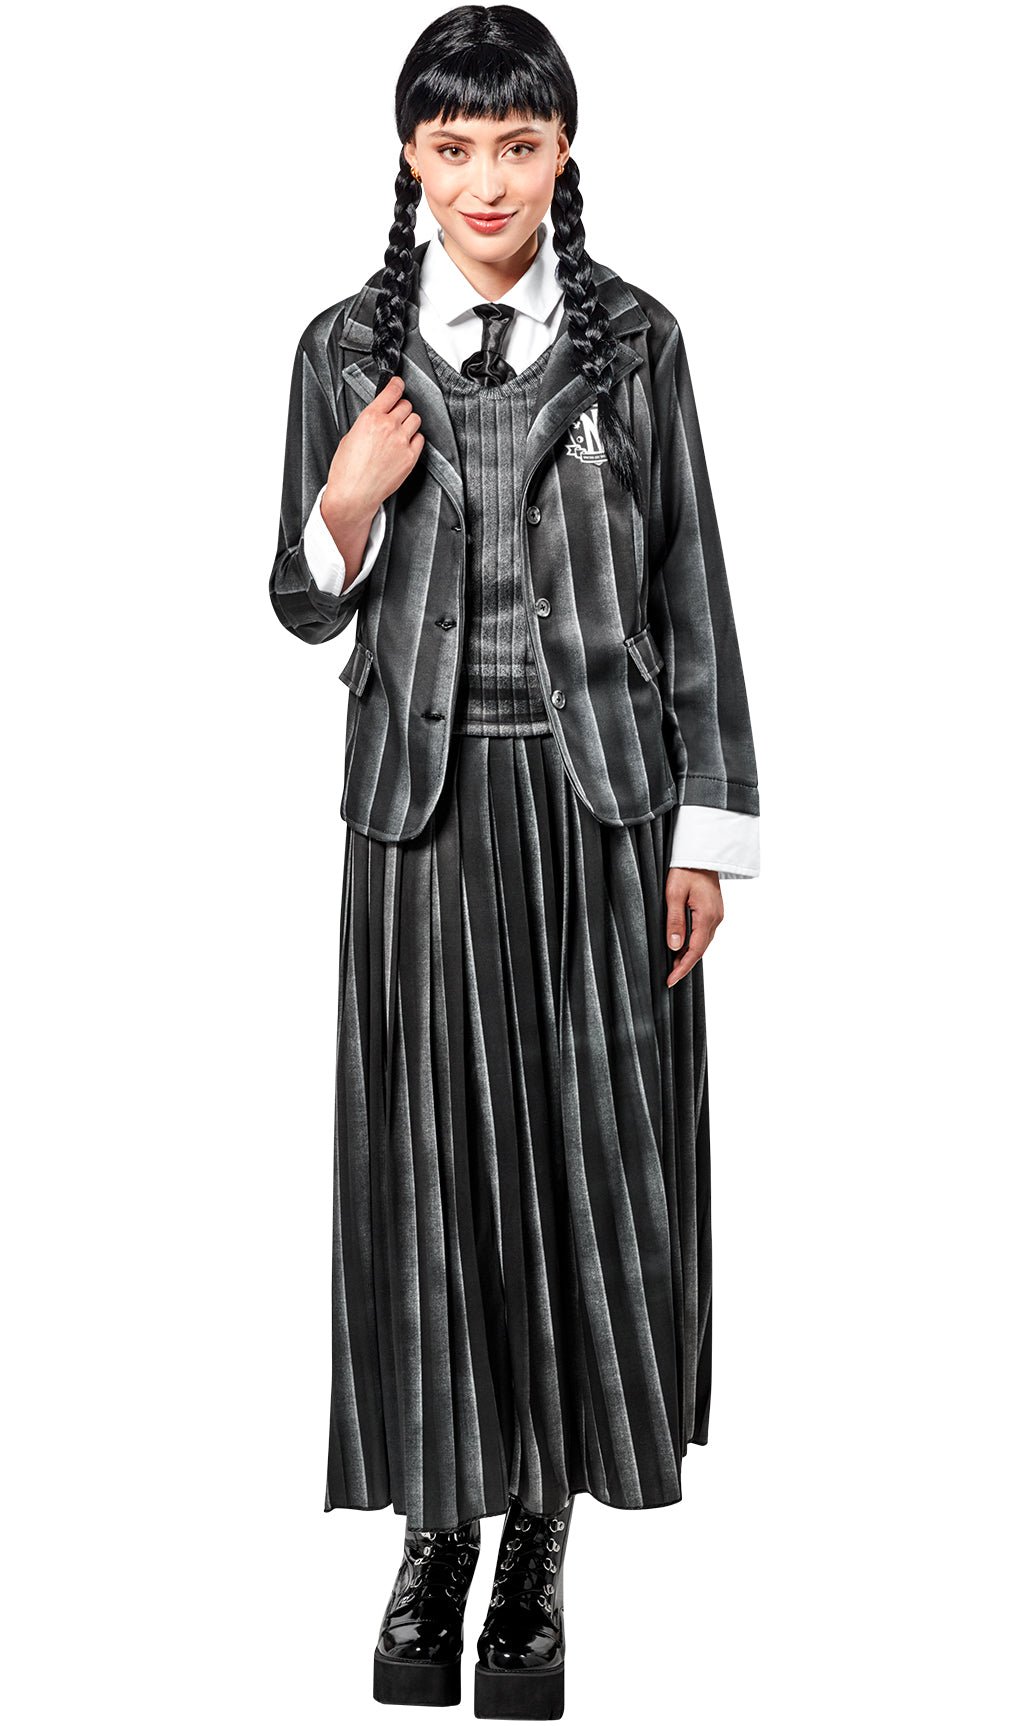 Costume Mercoledì Addams™ uniforme da donna